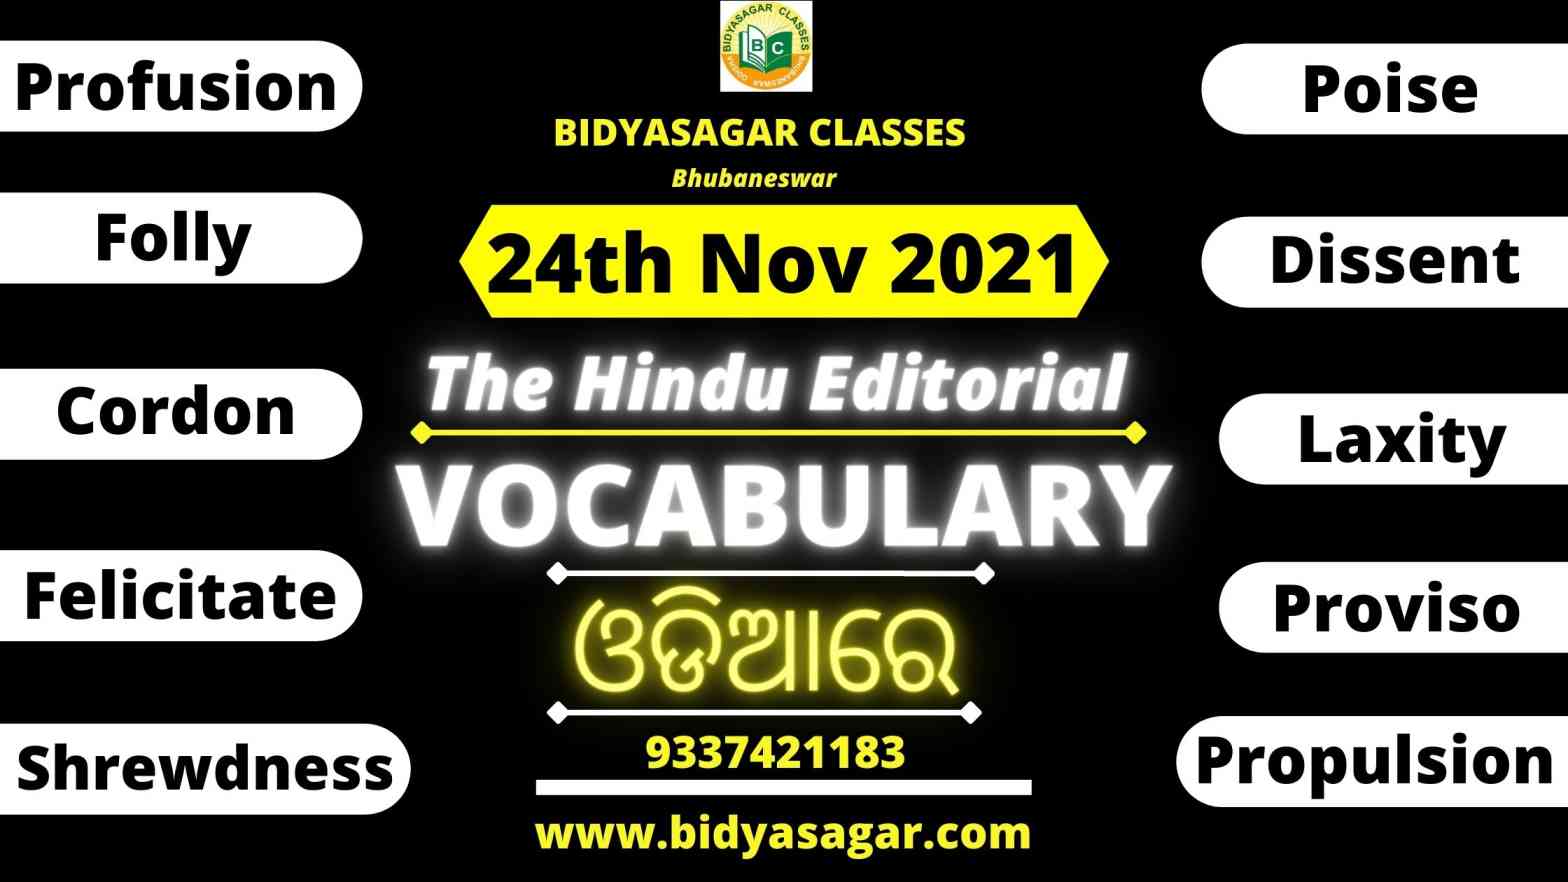 The Hindu Editorial Vocabulary of 24th November 2021